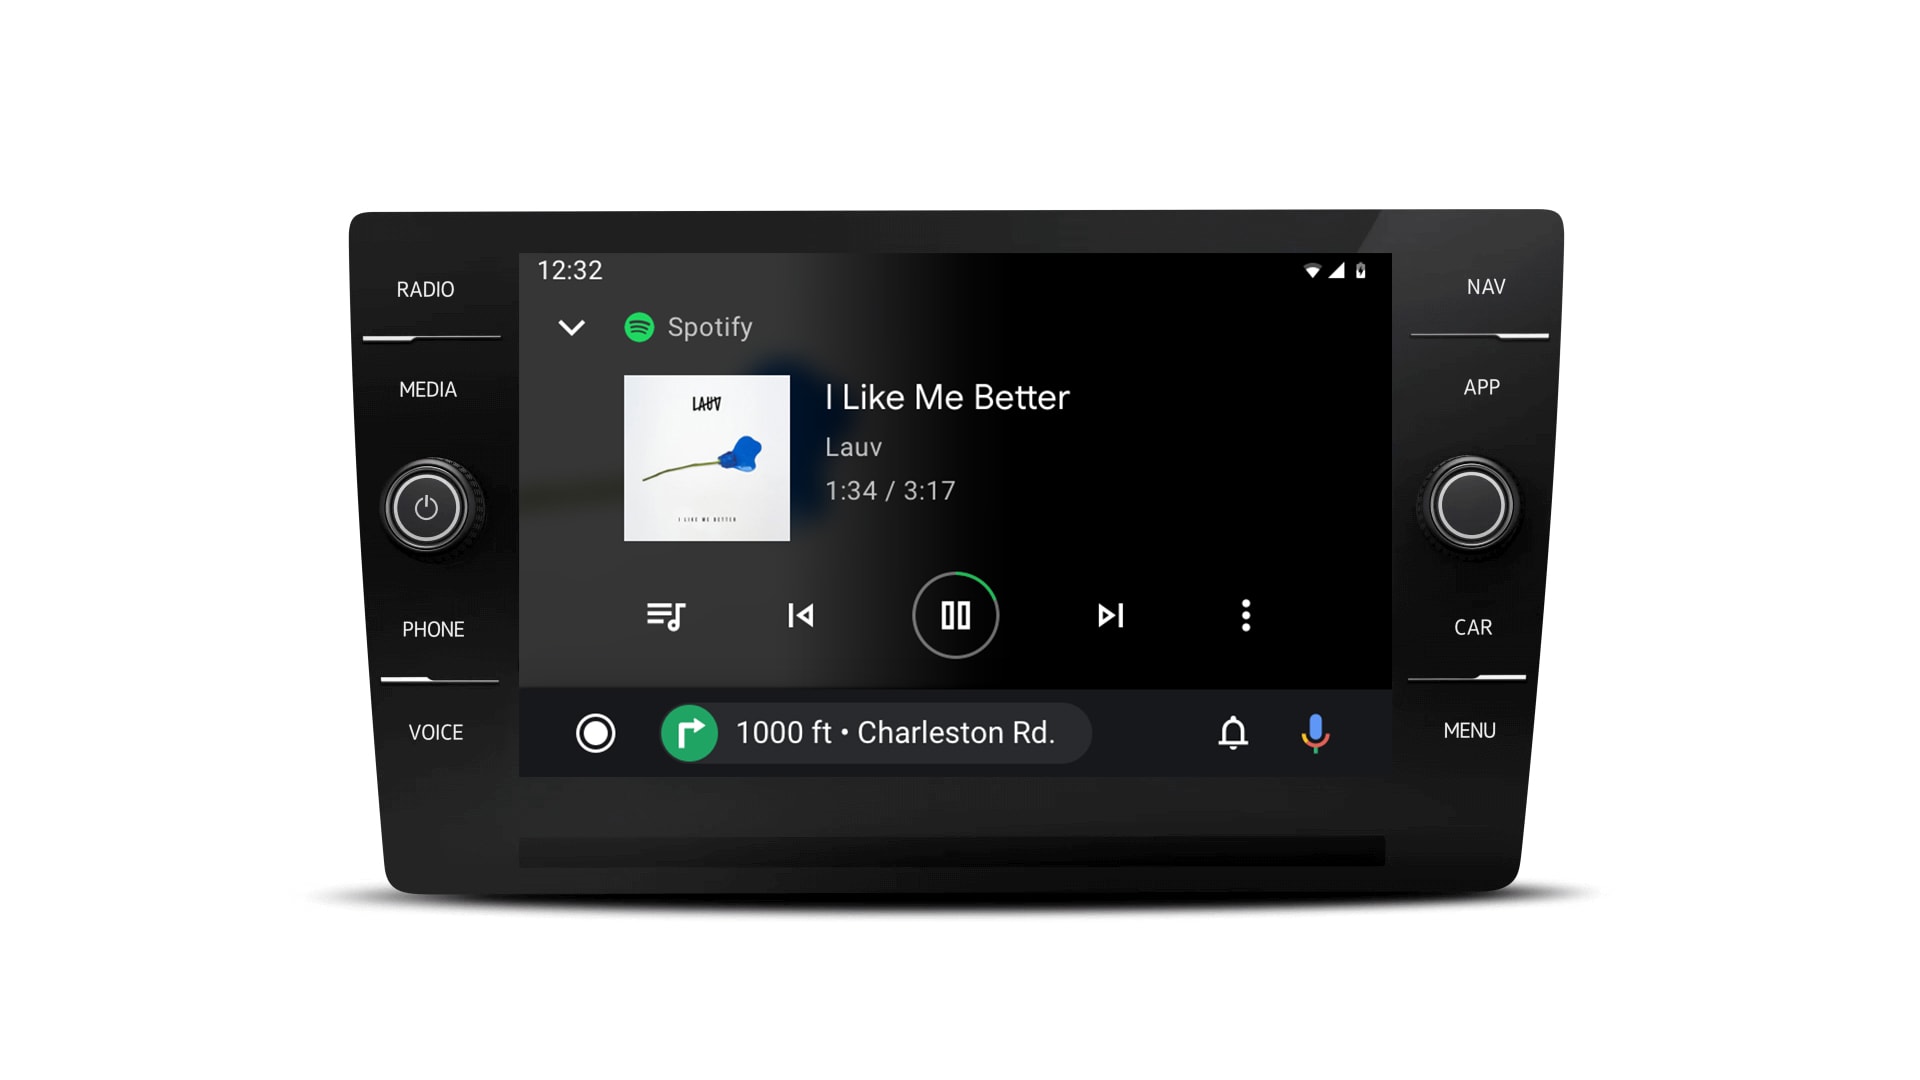 2020 Volkswagen Arteon with Spotify